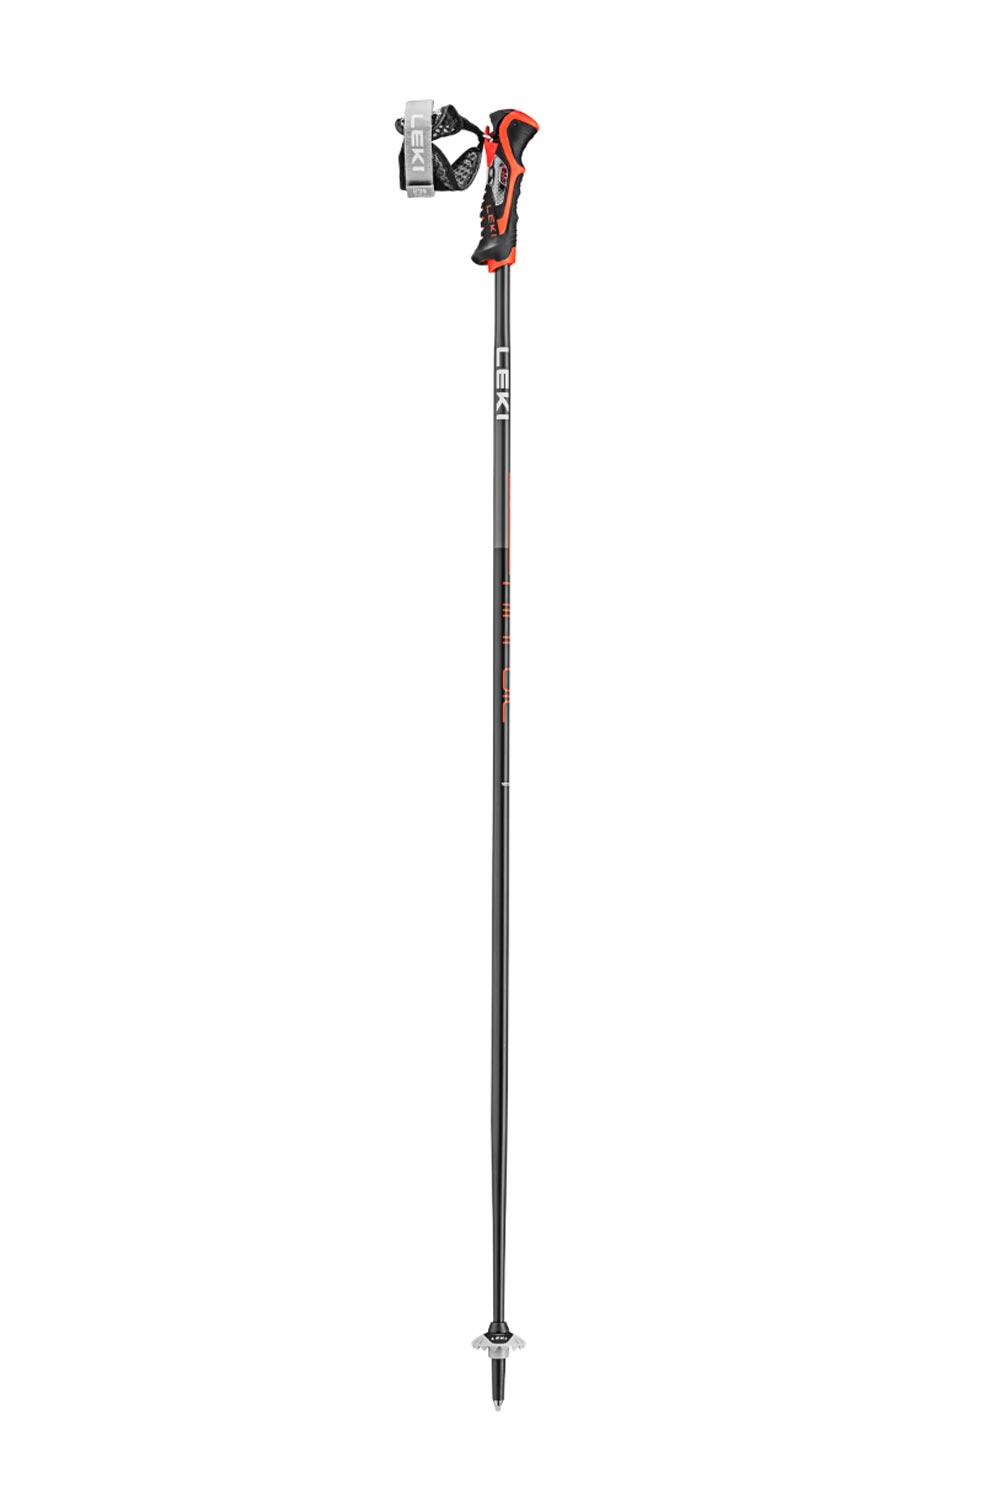 Leki Airfoil ski pole, black wtih red accents